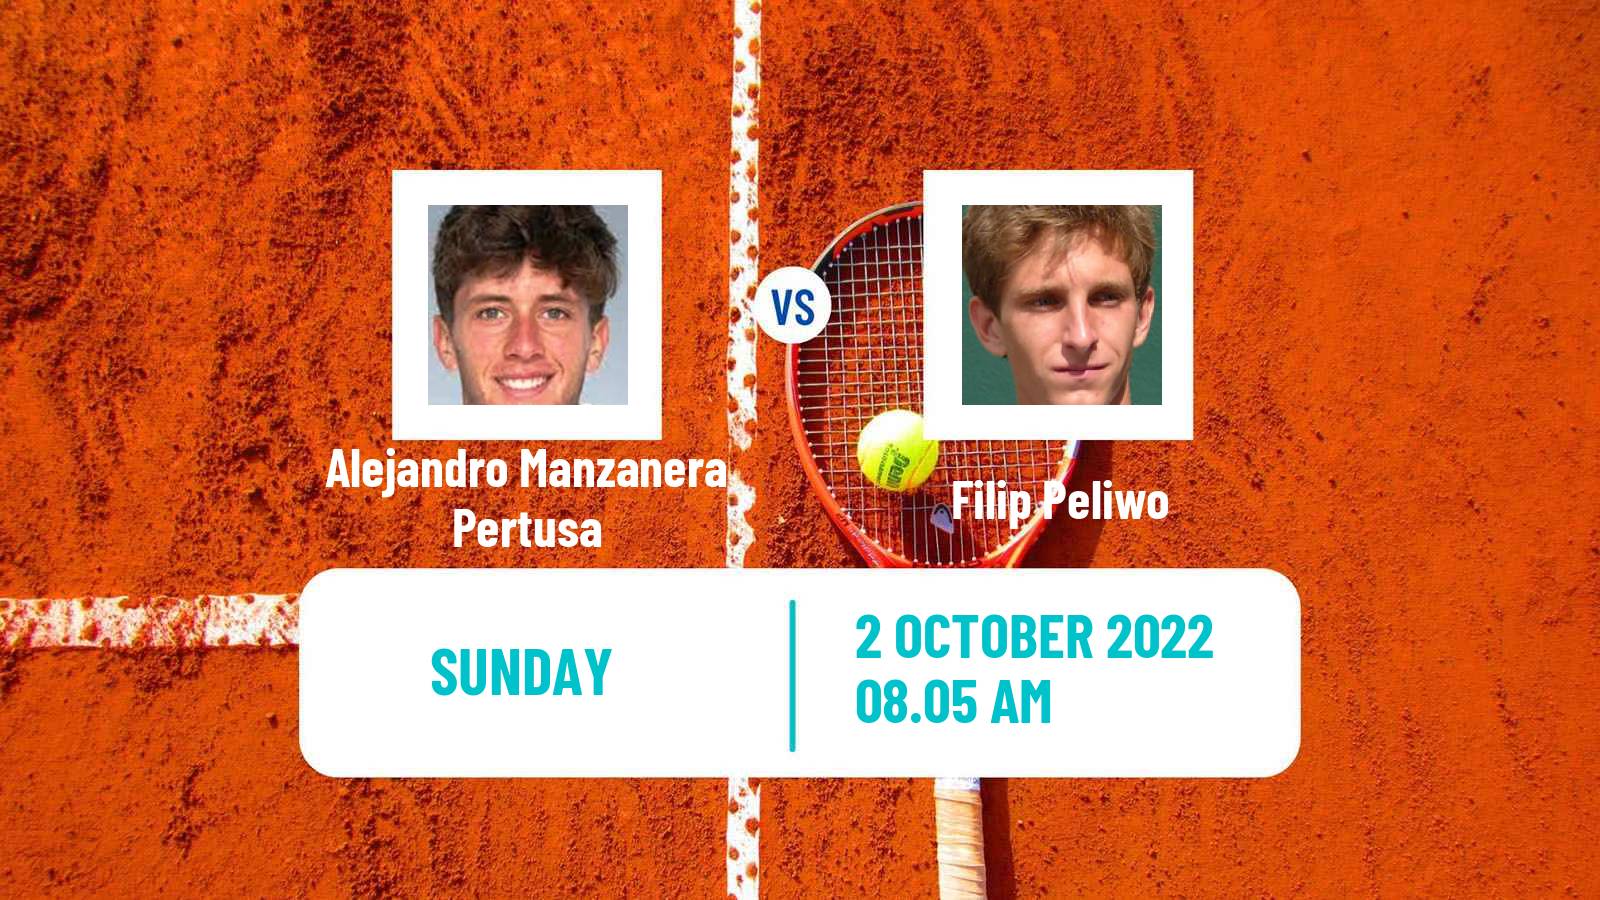 Tennis ATP Challenger Alejandro Manzanera Pertusa - Filip Peliwo